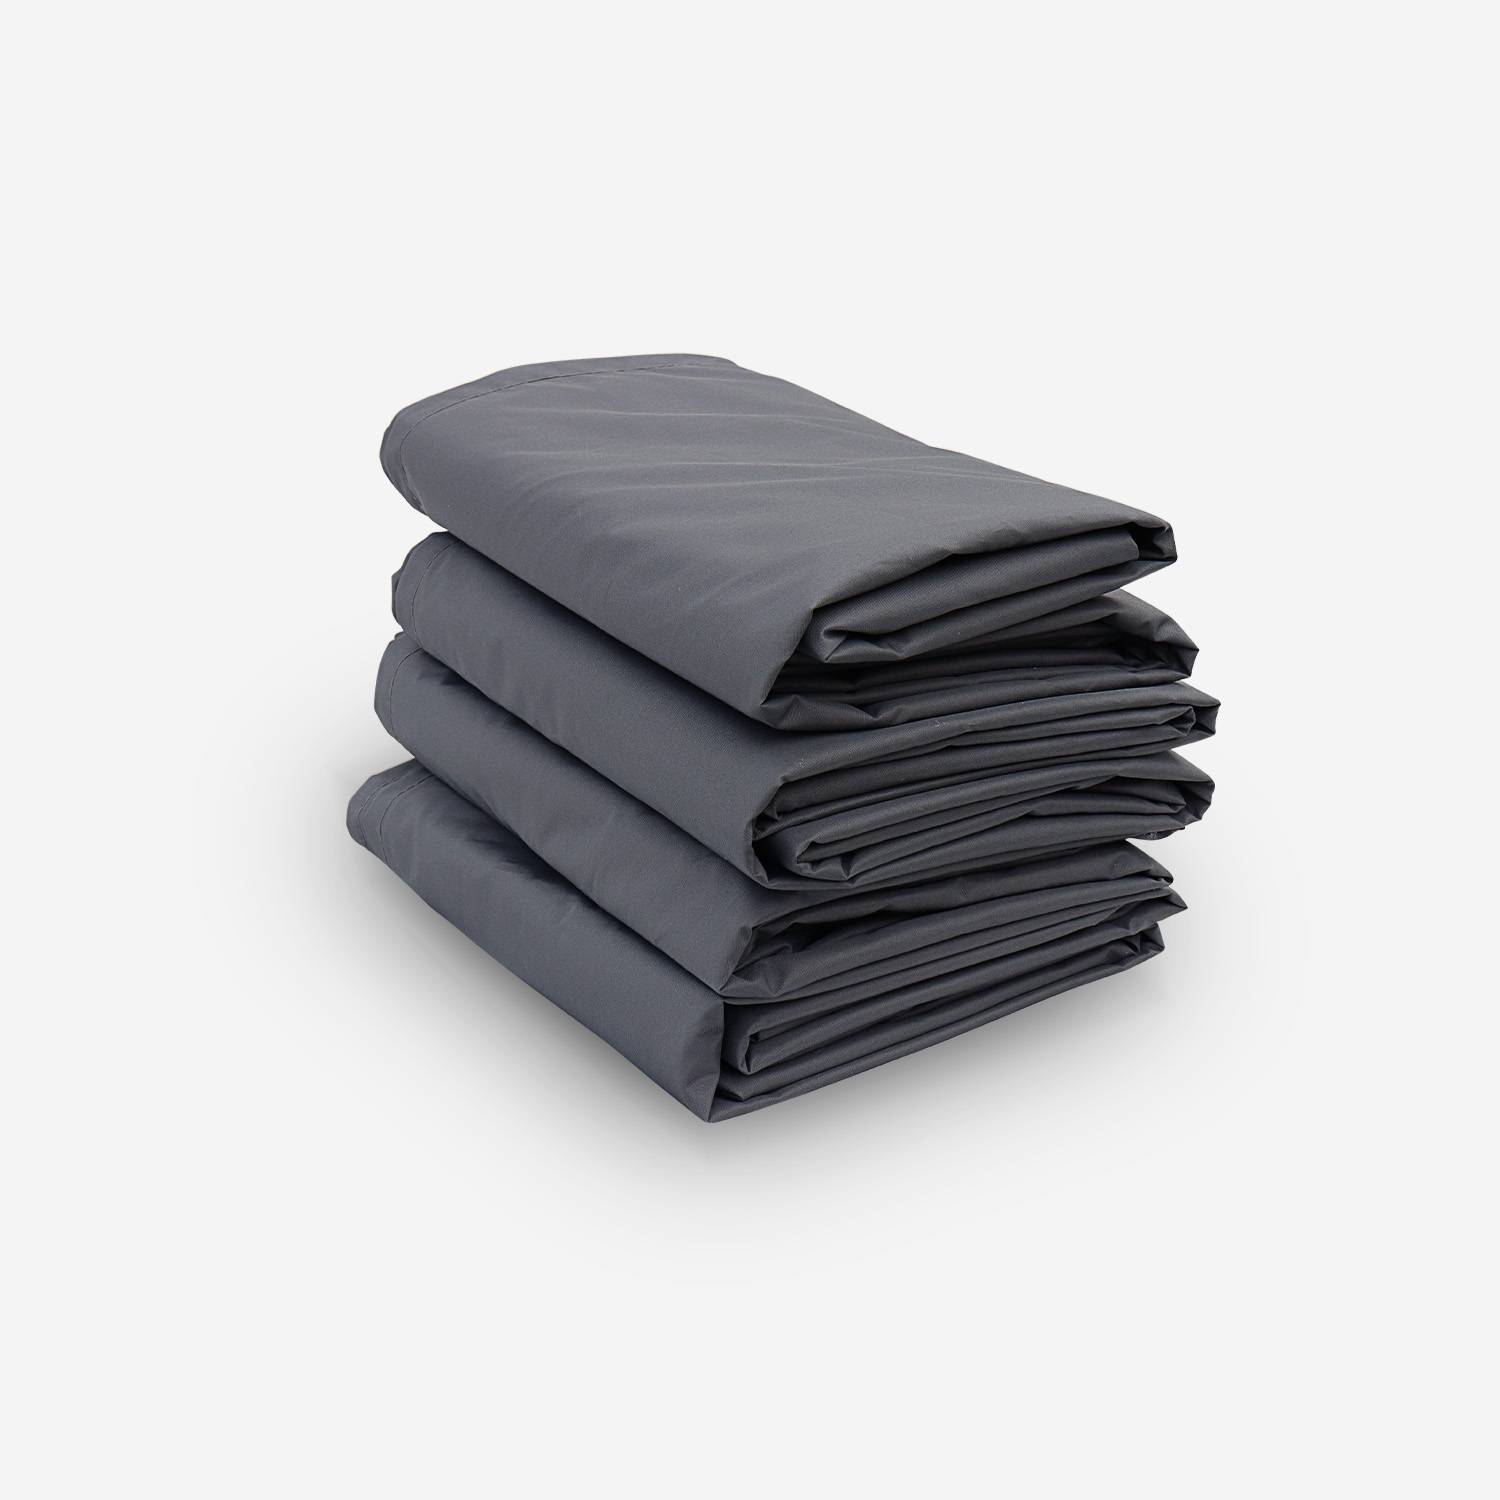 Protective covers for Venezia garden furniture set, dark grey. Water-resistant, polyamide coating Photo2